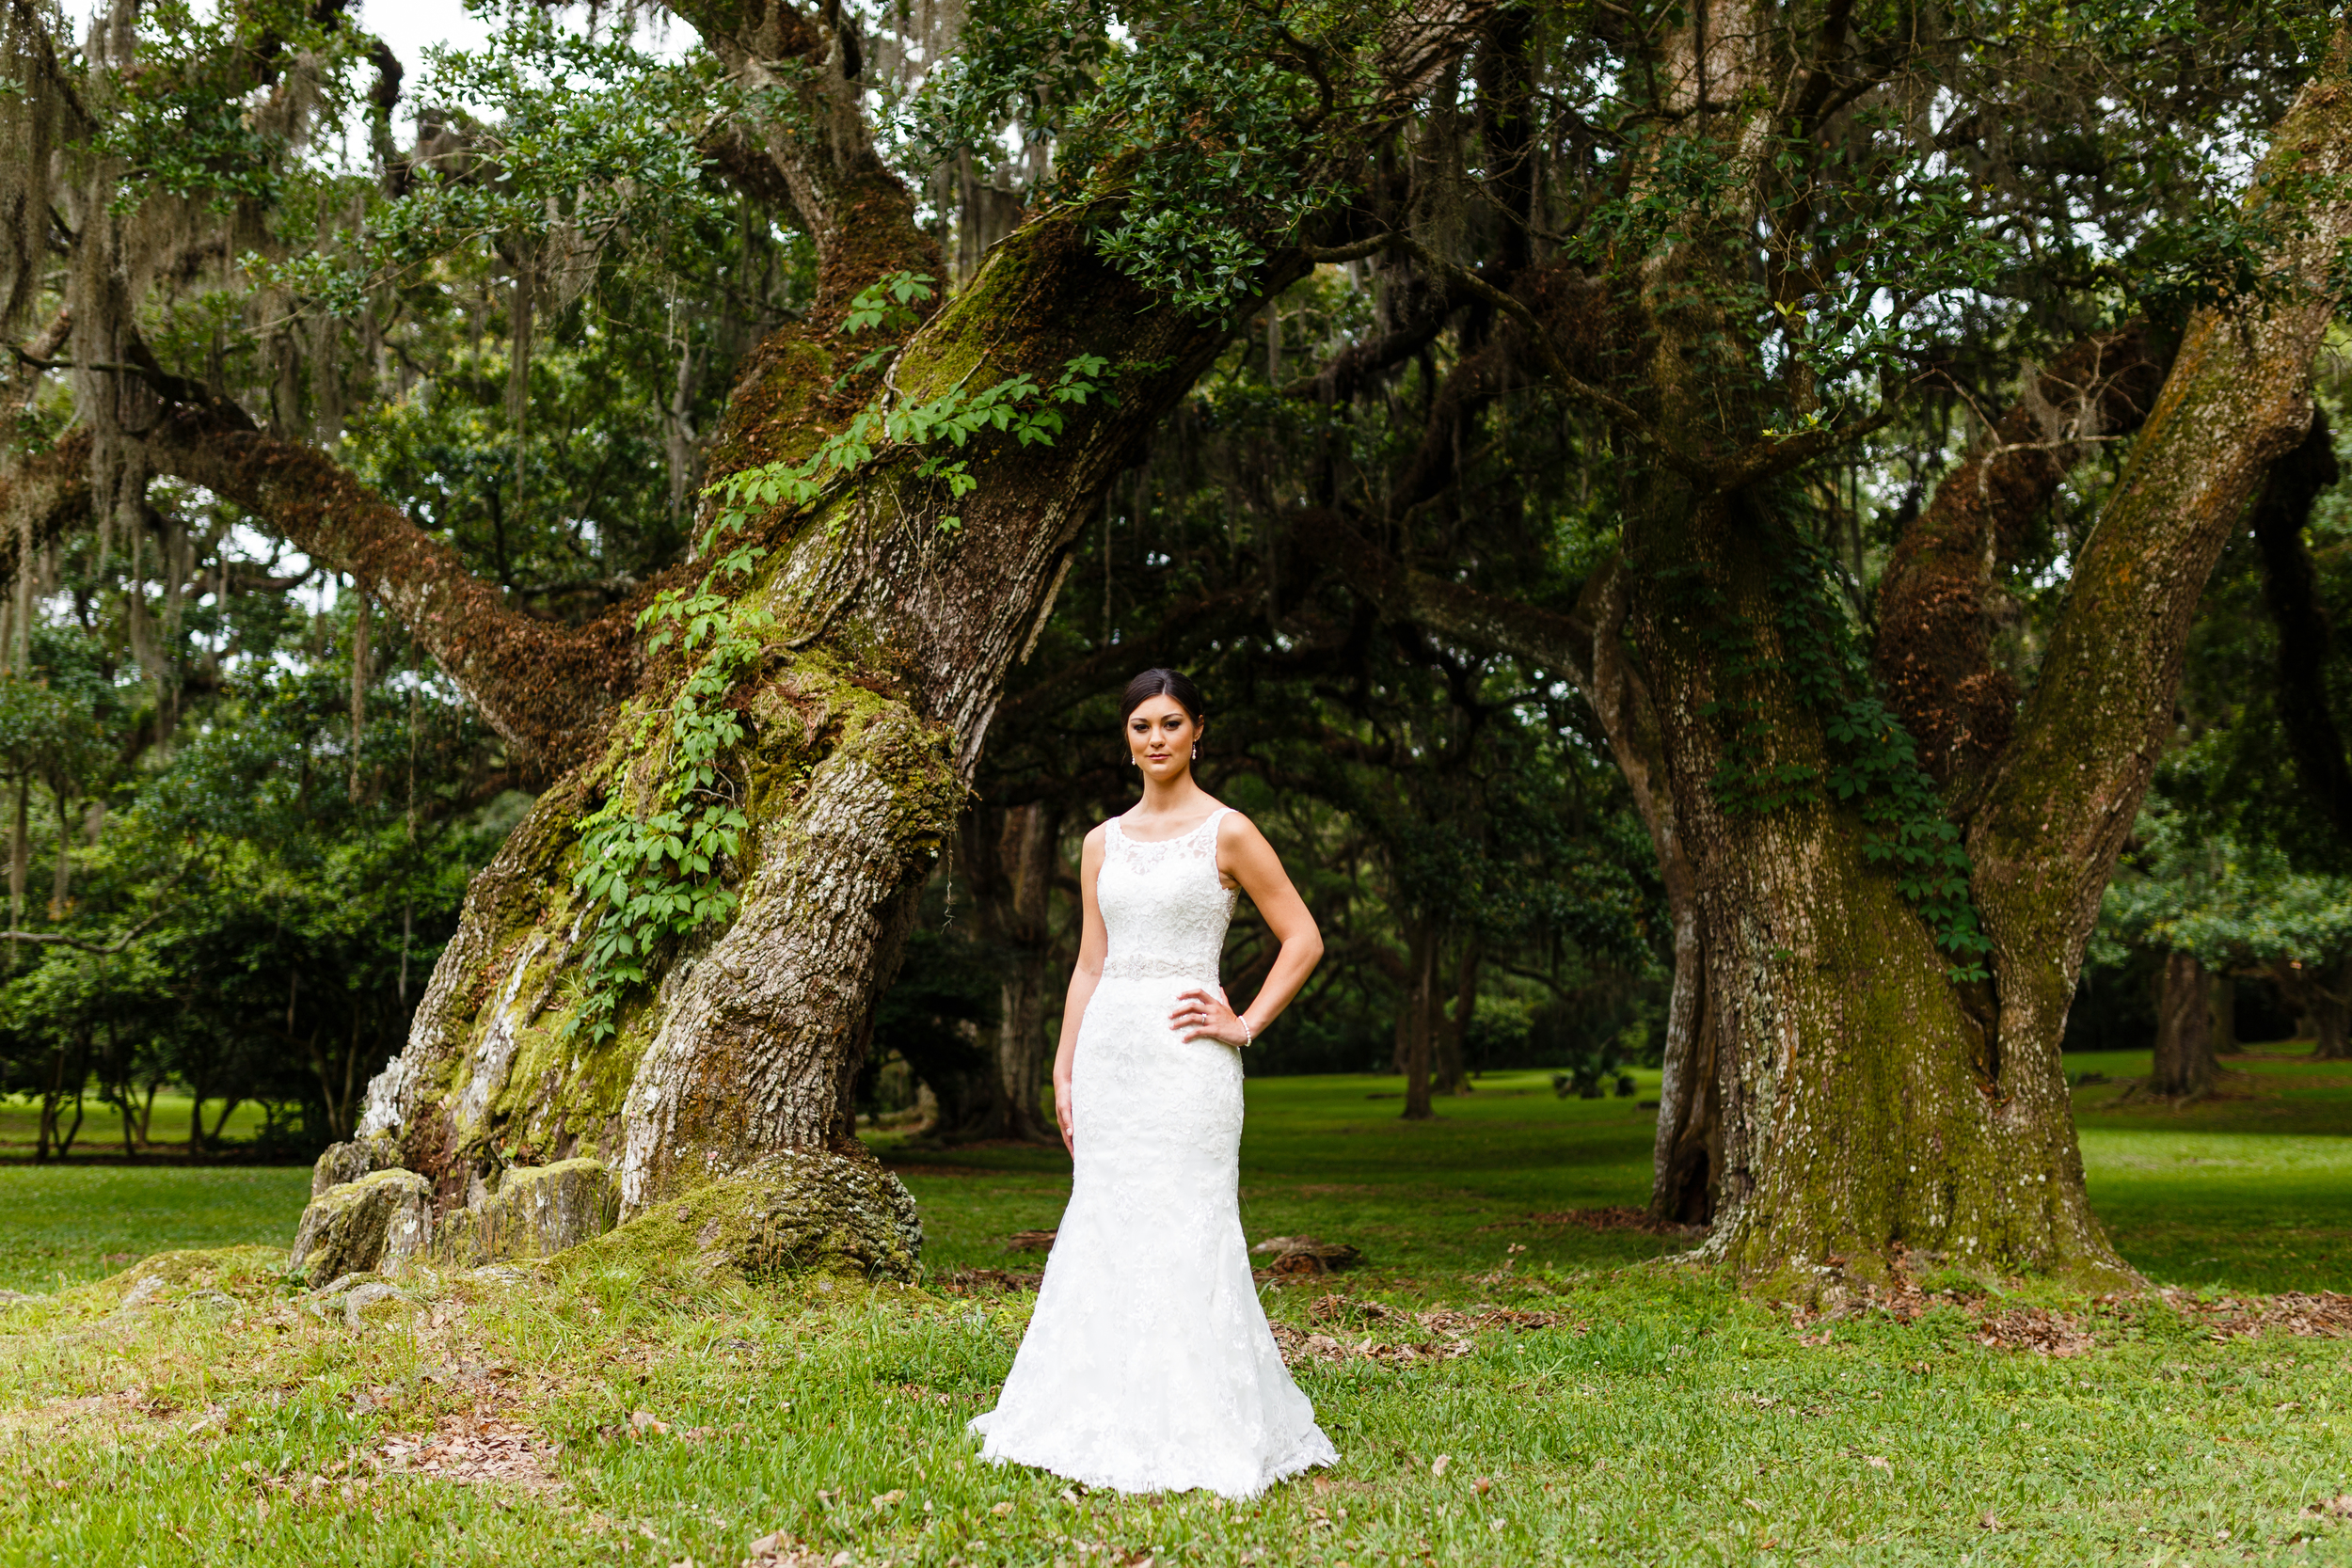 Bridal-wedding-portrait-lafayette-broussard-youngsville-photographer-1-4.jpg